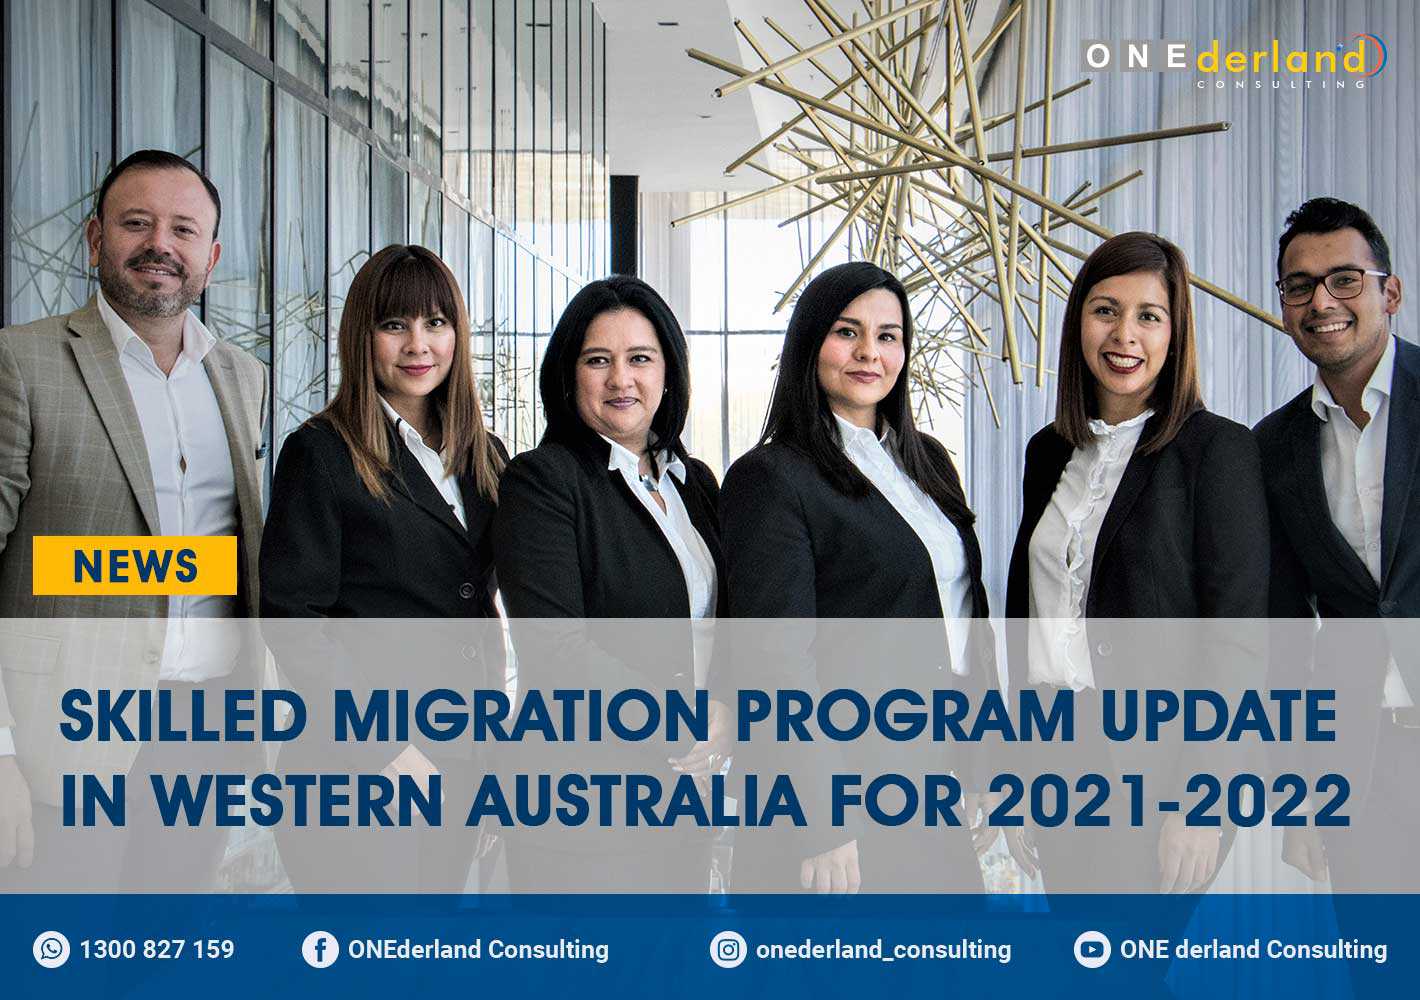 Skilled Migration Program Update in Western Australia for 2021-2022